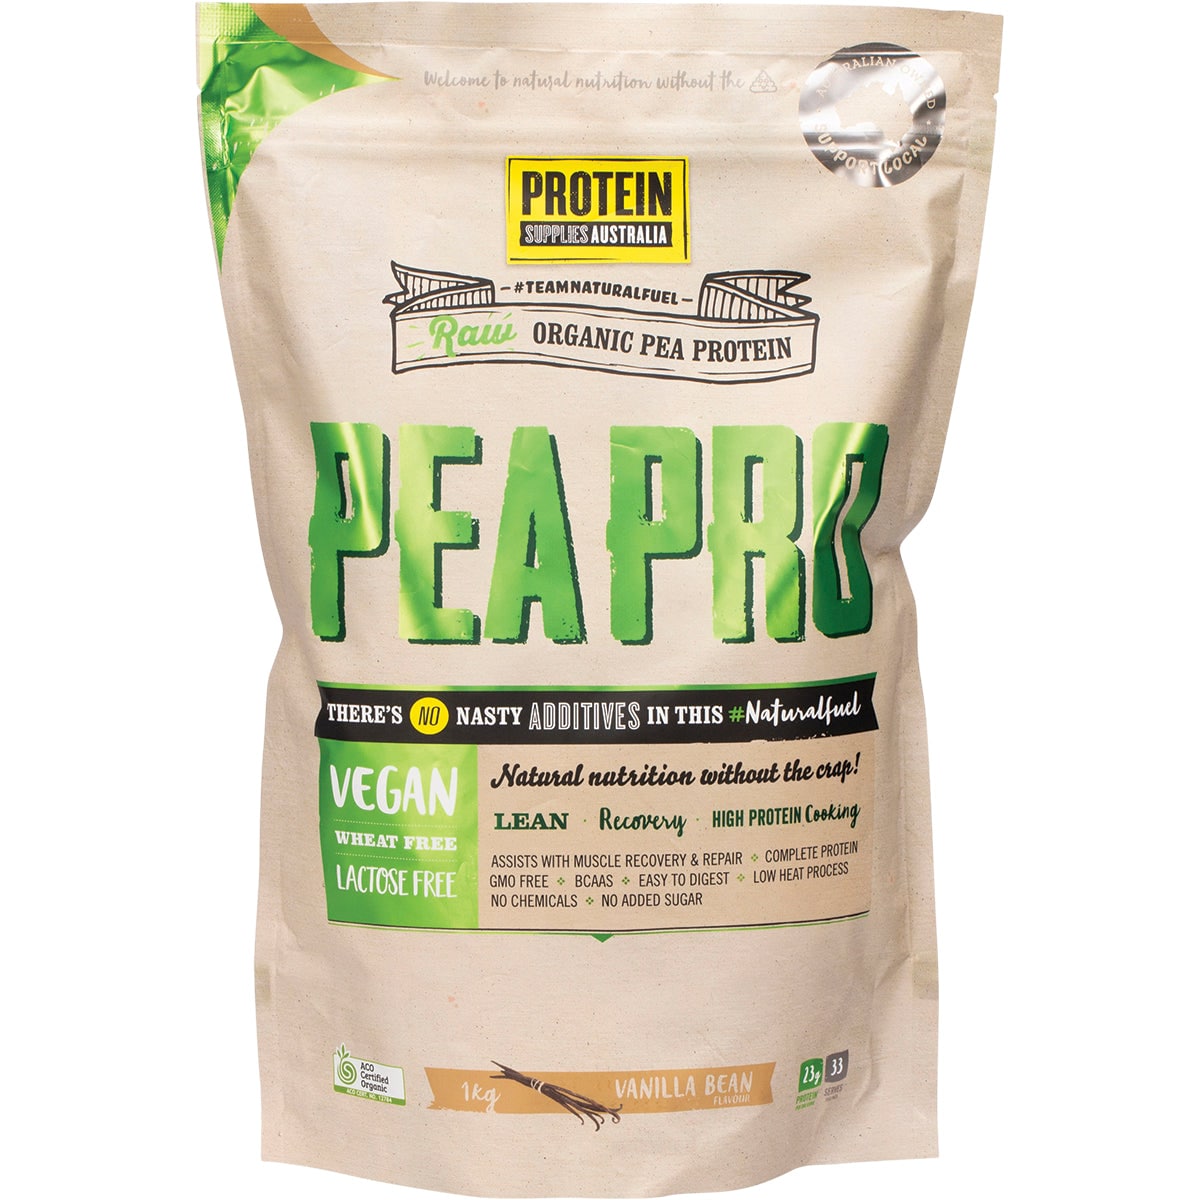 Protein Supplies Australia PeaPro Vegan Pea Protein Vanilla Bean 1kg Australia